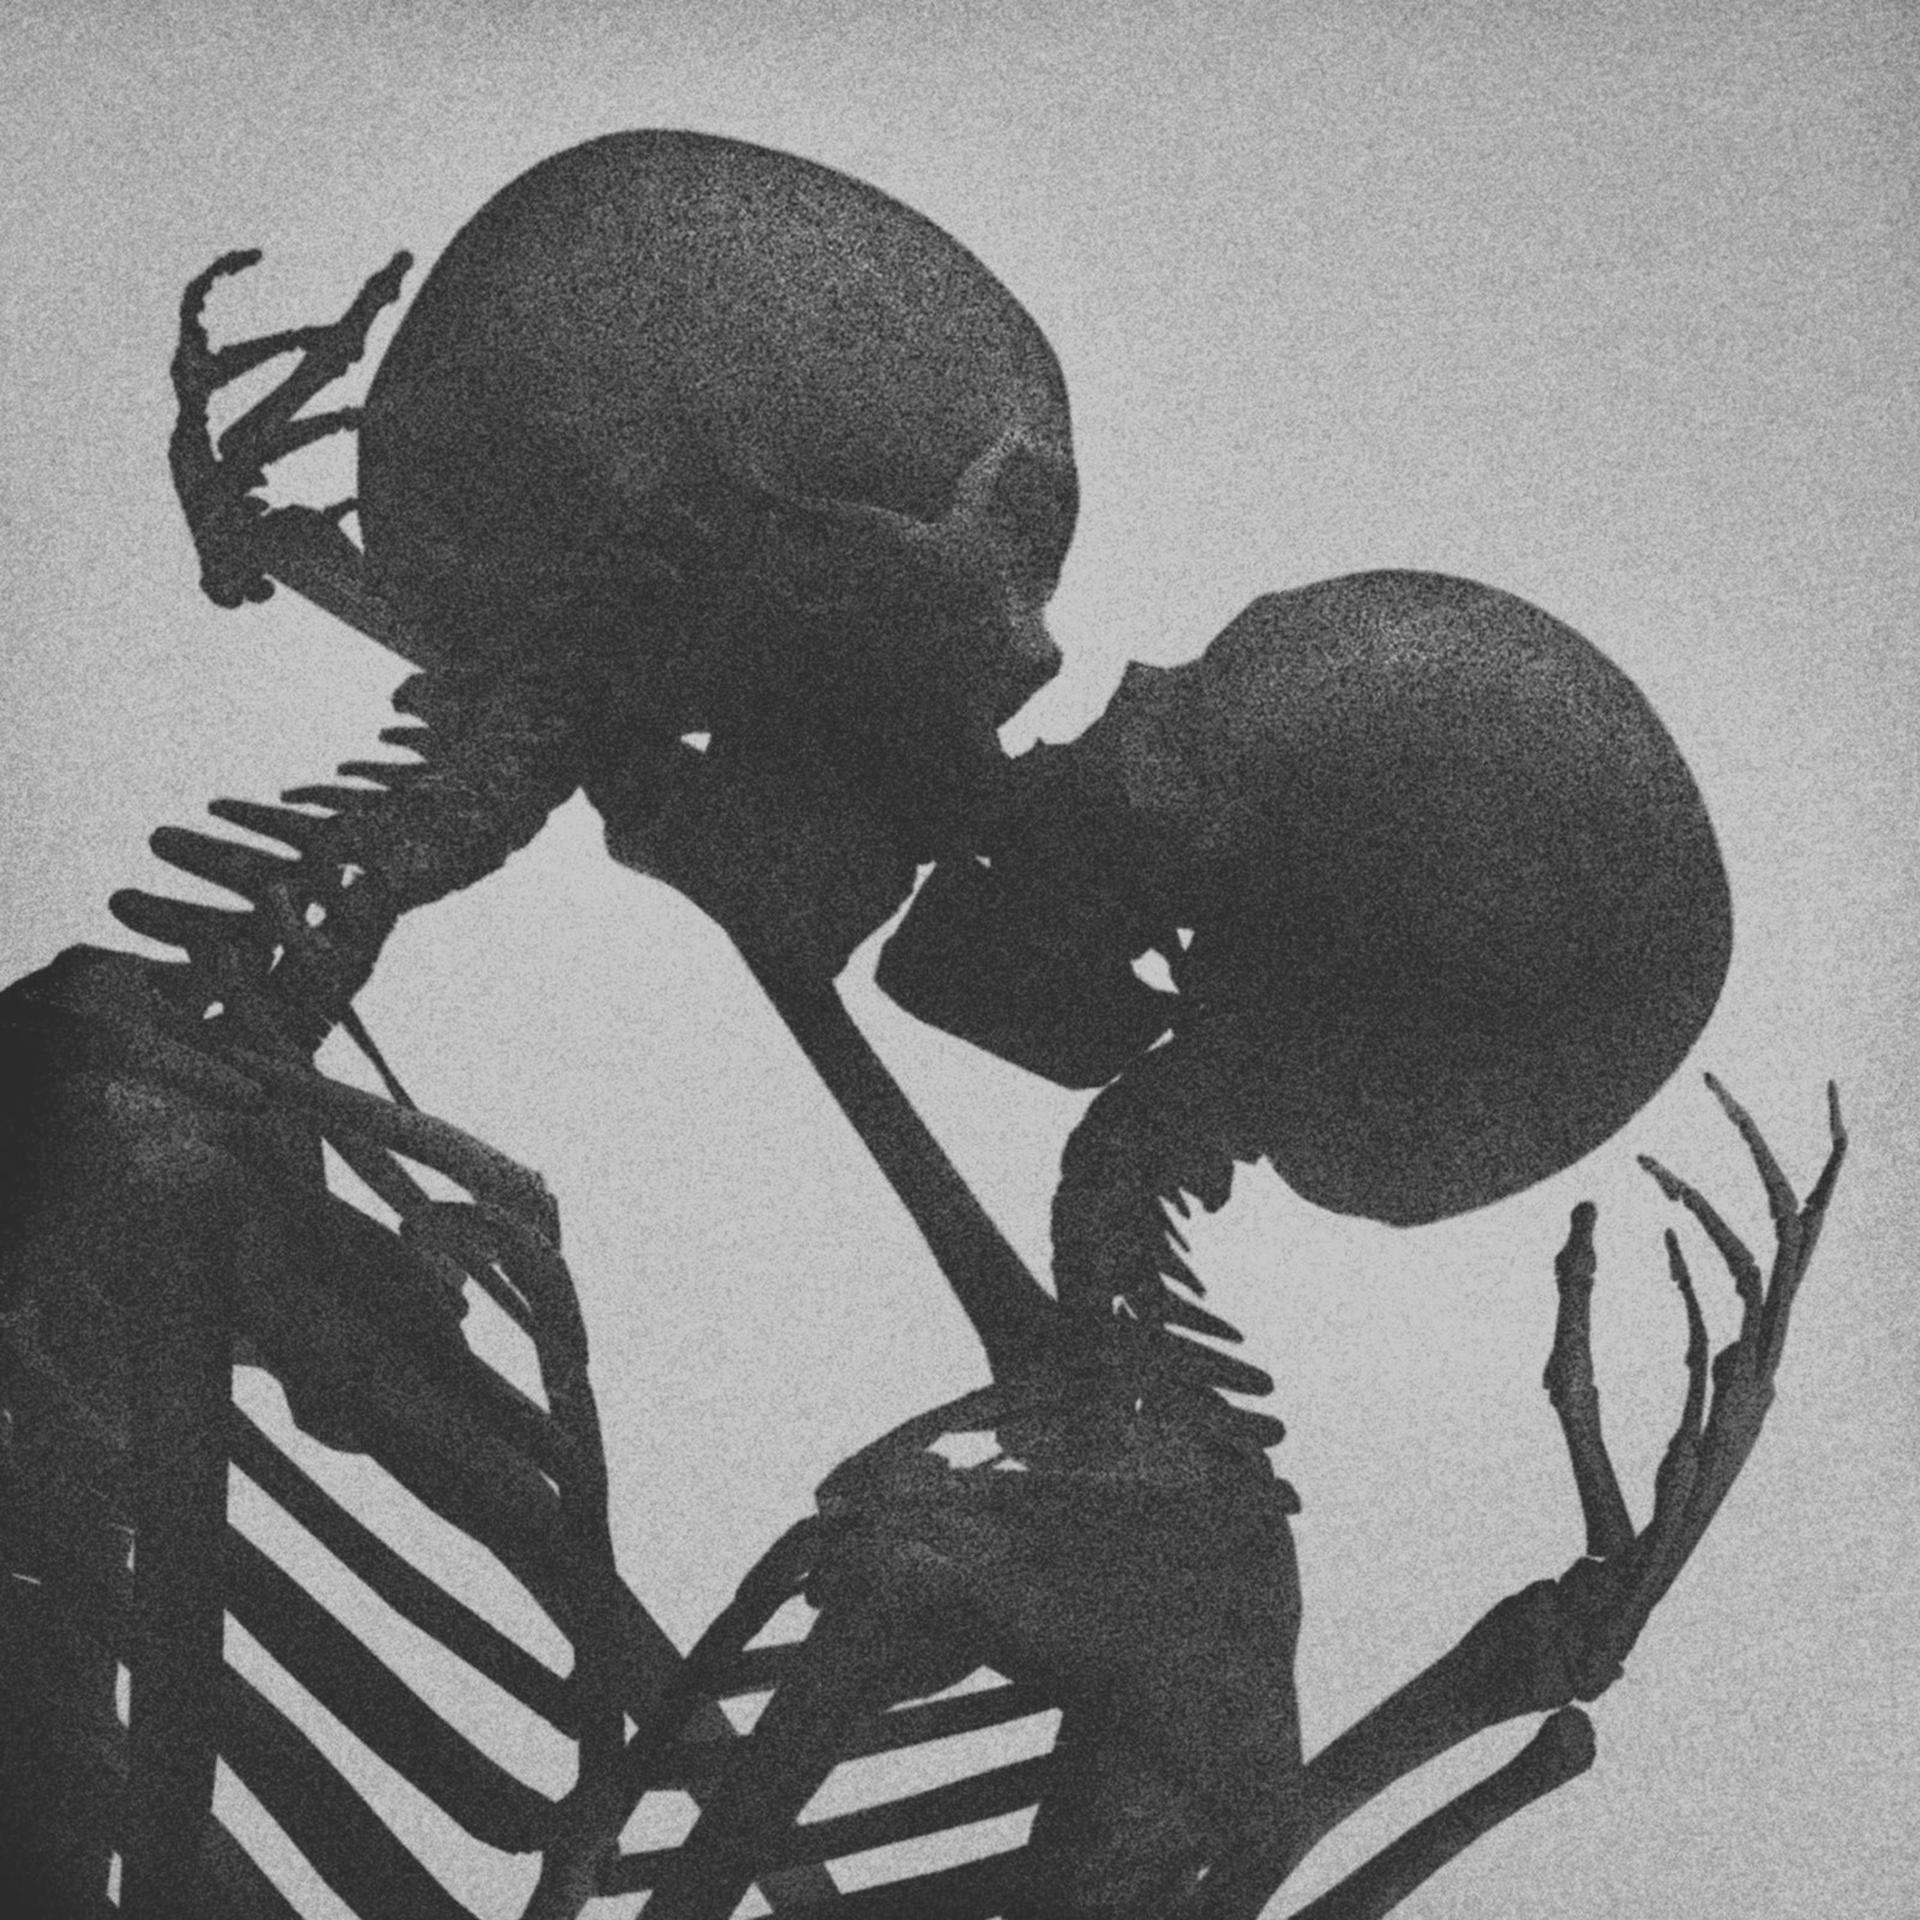 Скелеты пара. Скелет целует. Влюбленные скелеты.